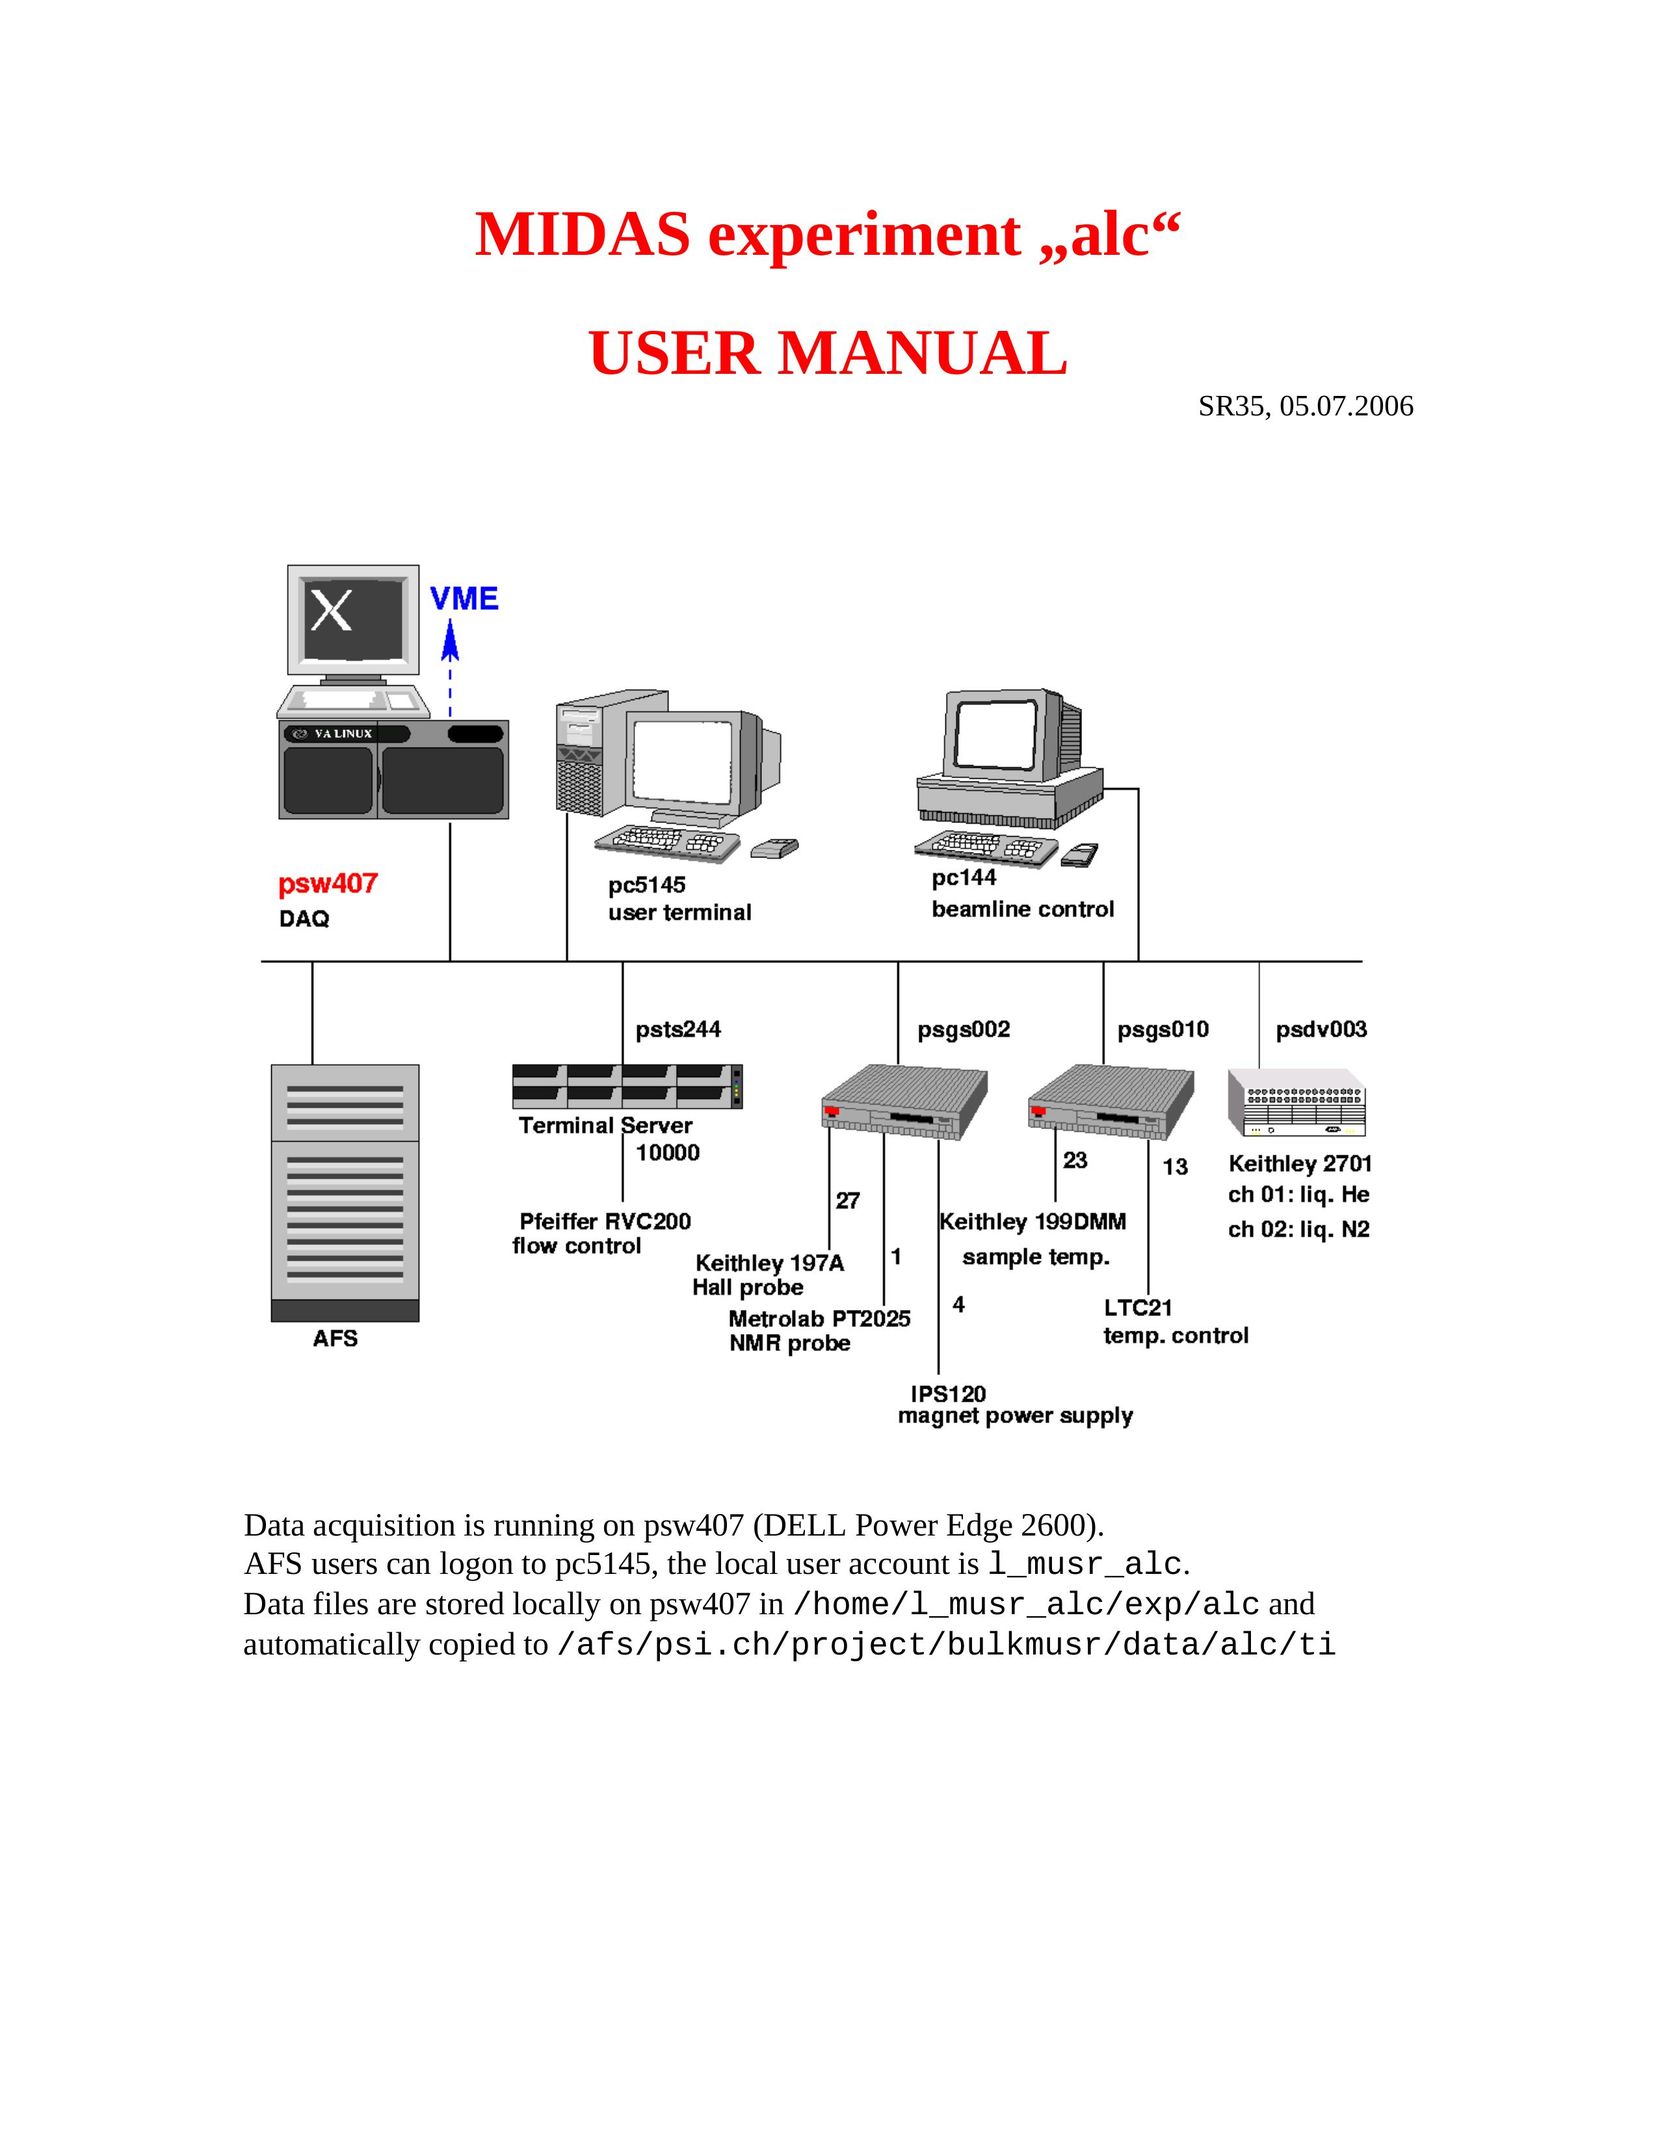 Midas Consoles SR35 Server User Manual